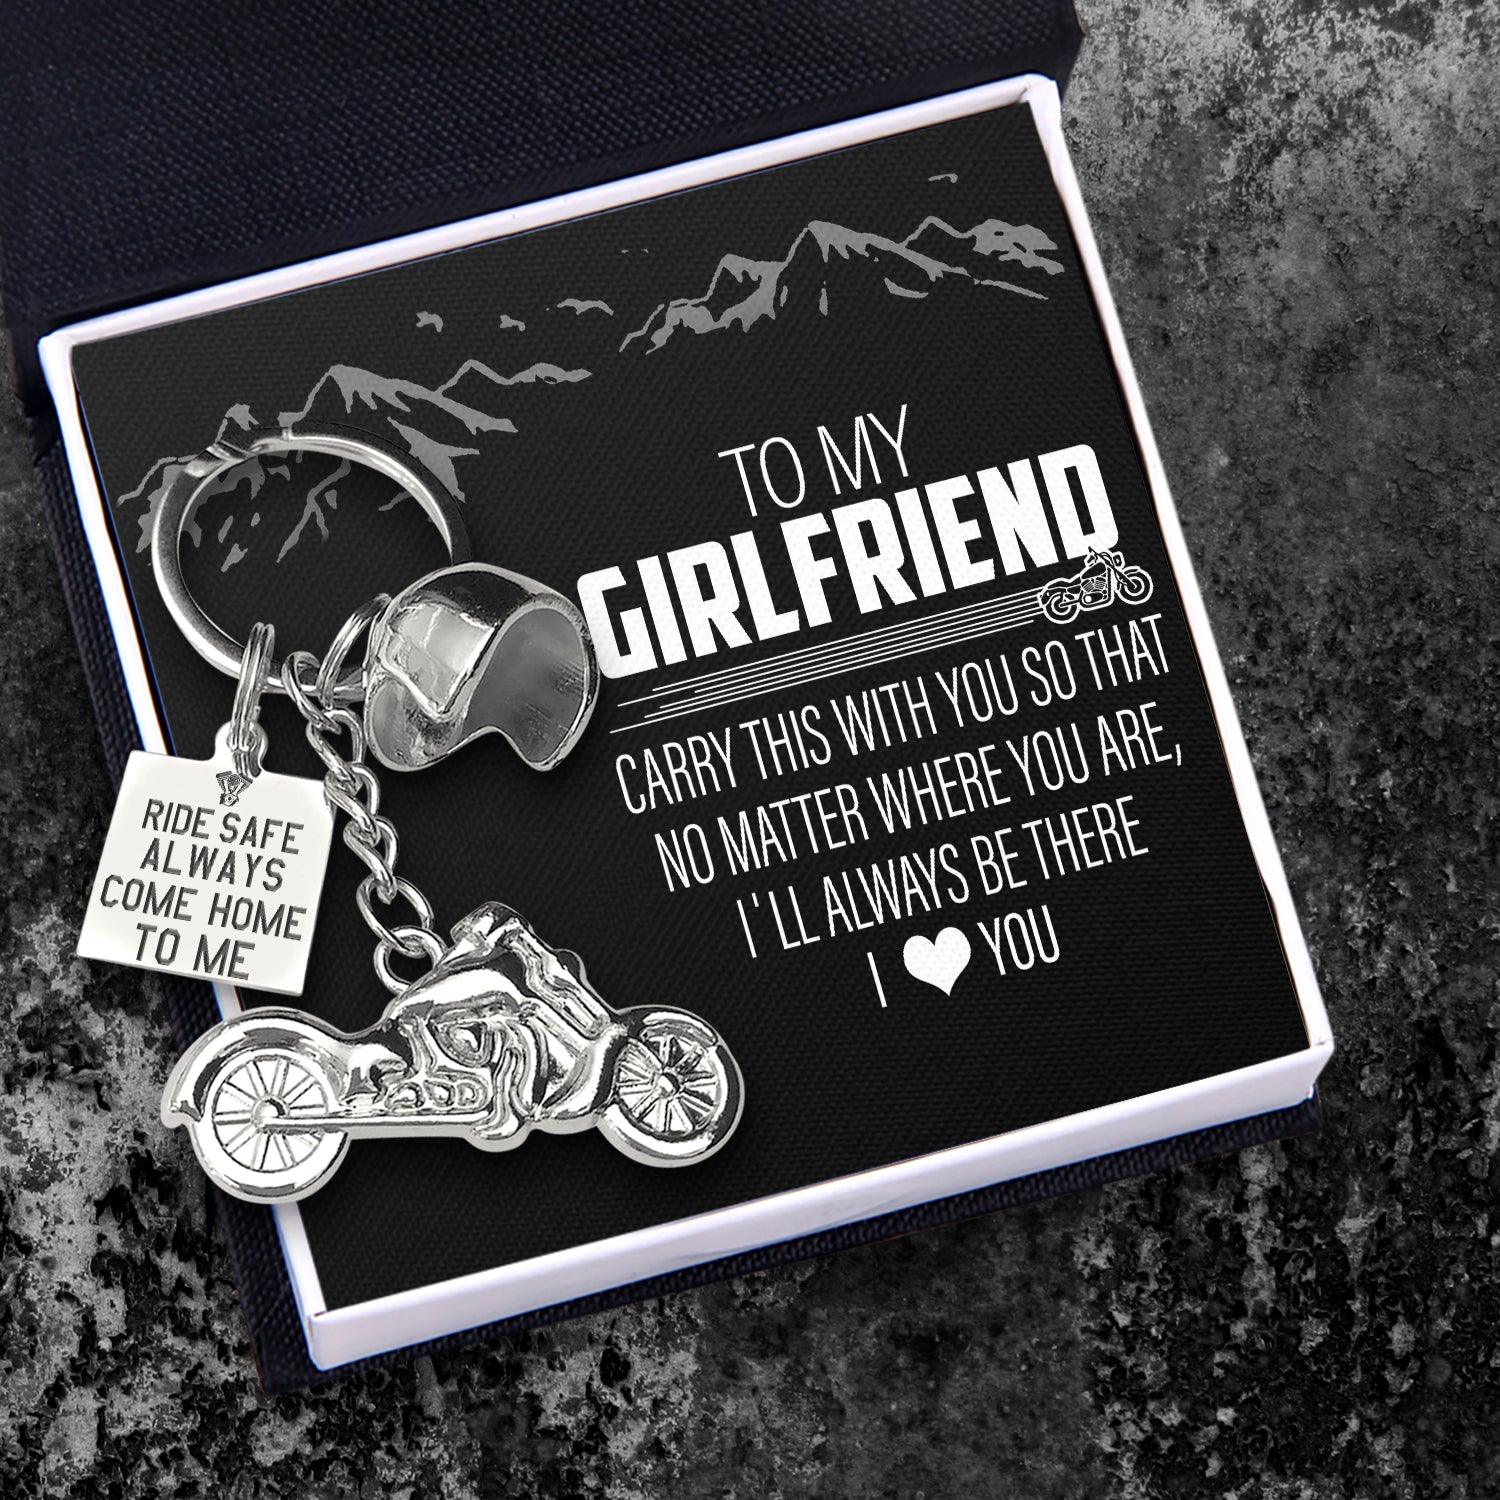 Classic Bike Keychain - To My Girlfriend - I Love You - Augkt13001 - Gifts Holder